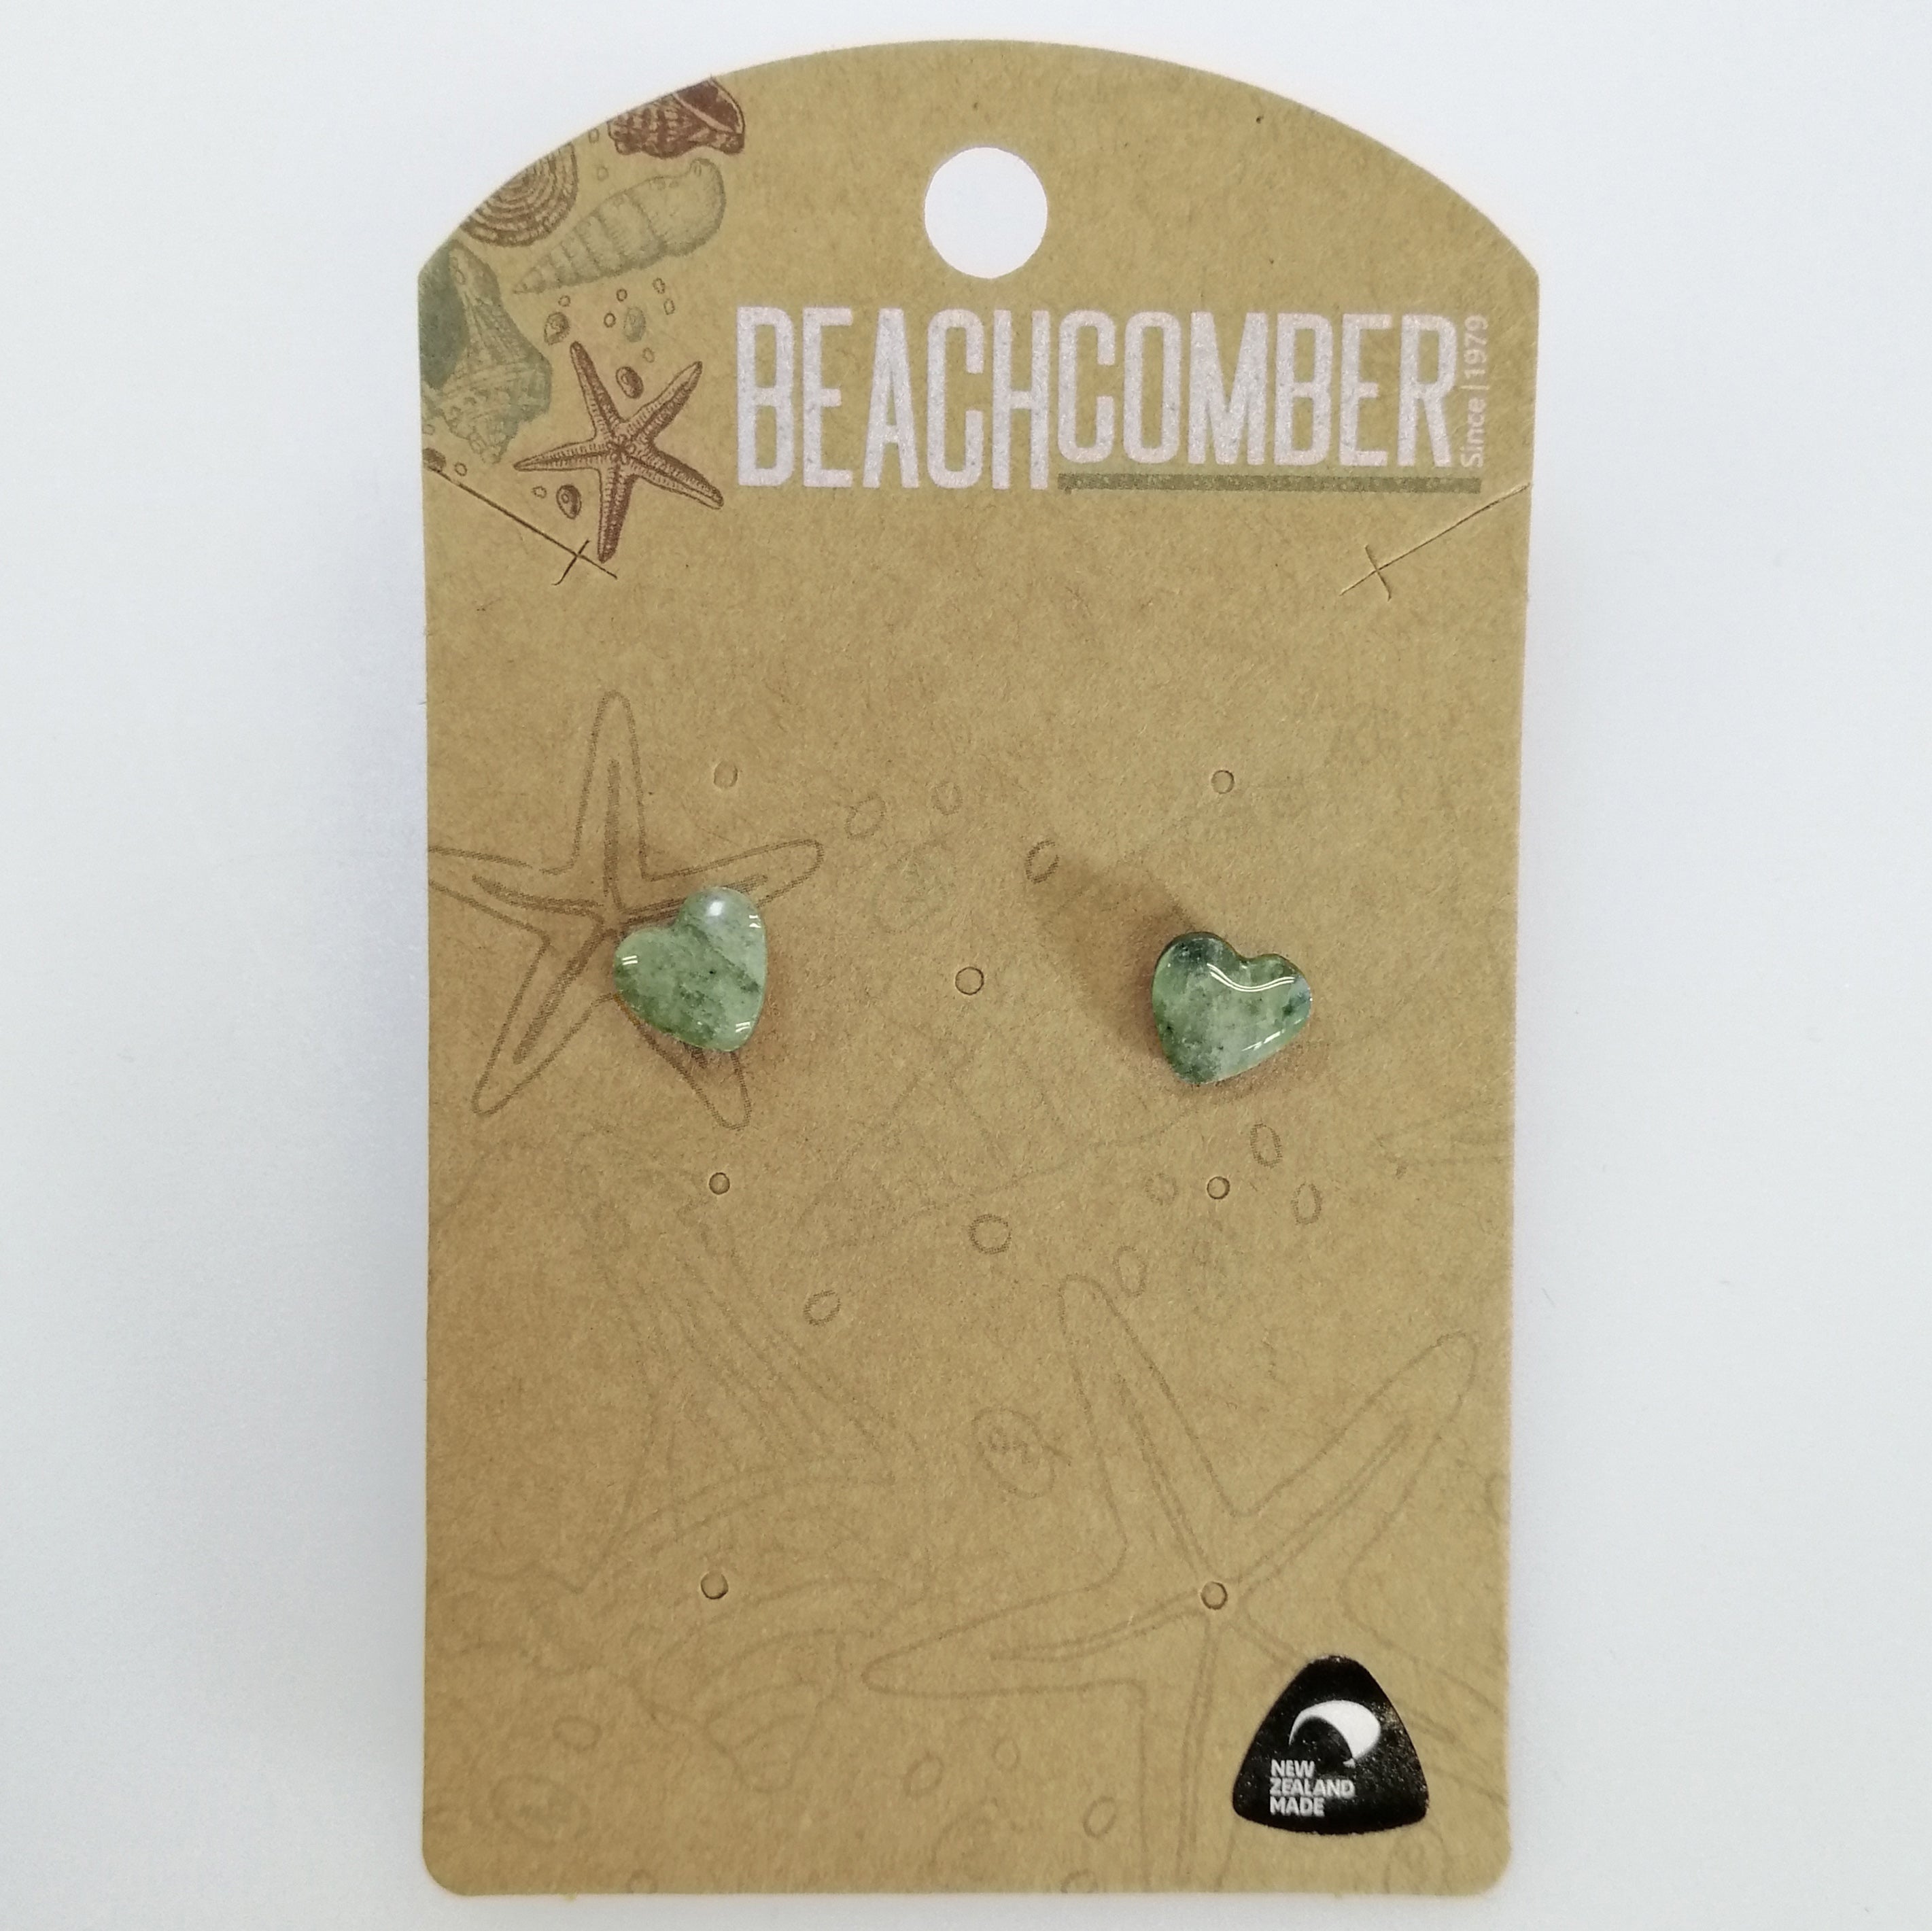 Beachcomber - Pounamu Greenstone Heart Stud Earrings